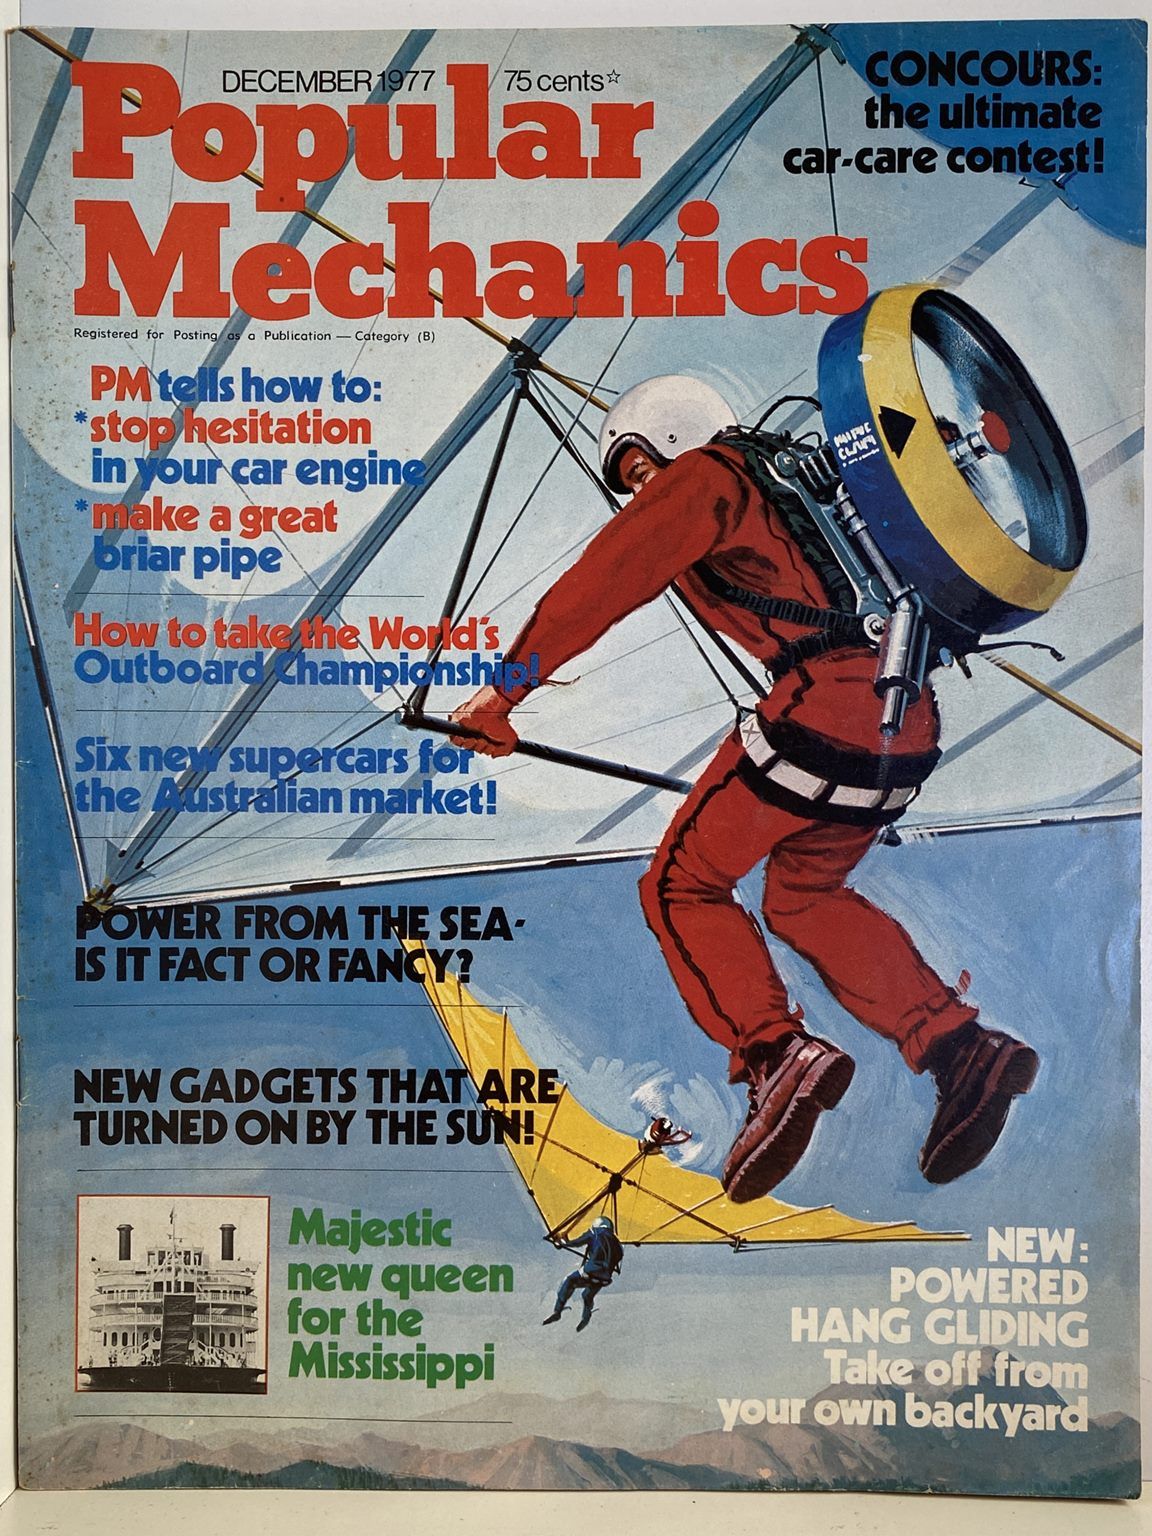 VINTAGE MAGAZINE: Popular Mechanics - Vol. 146, No. 12 - December 1977